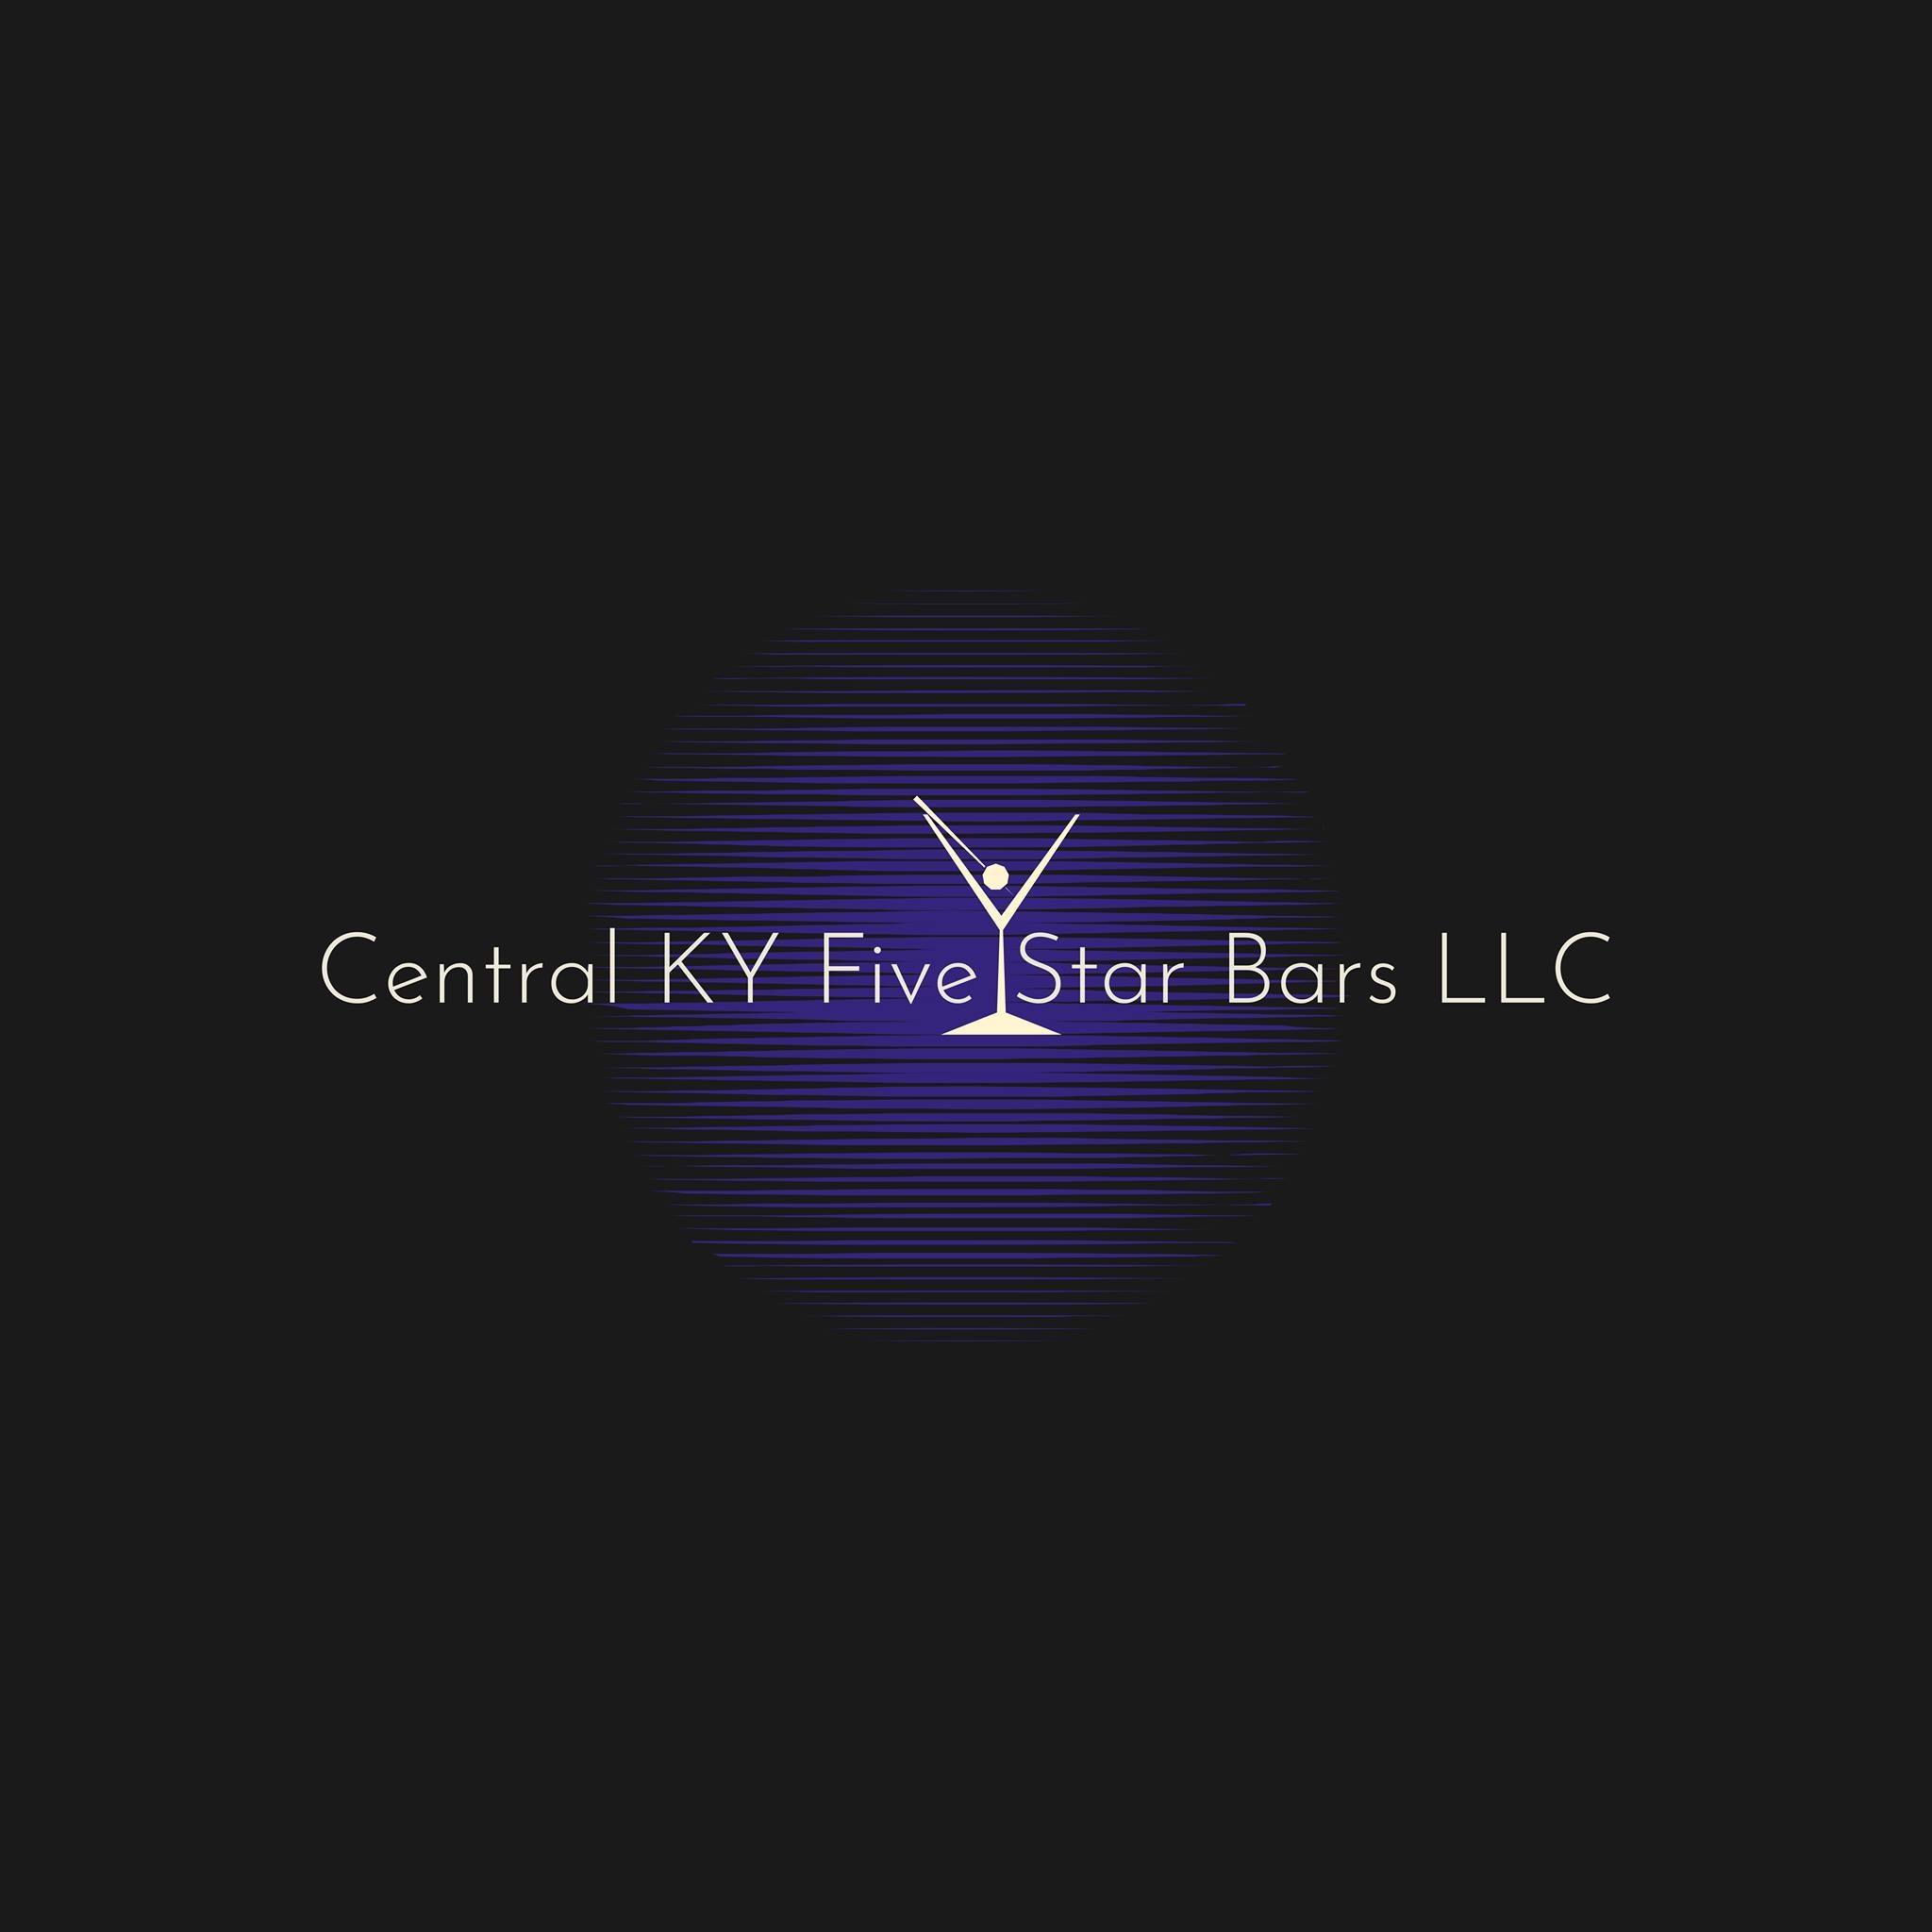 Central Kentucky Five Star Bars